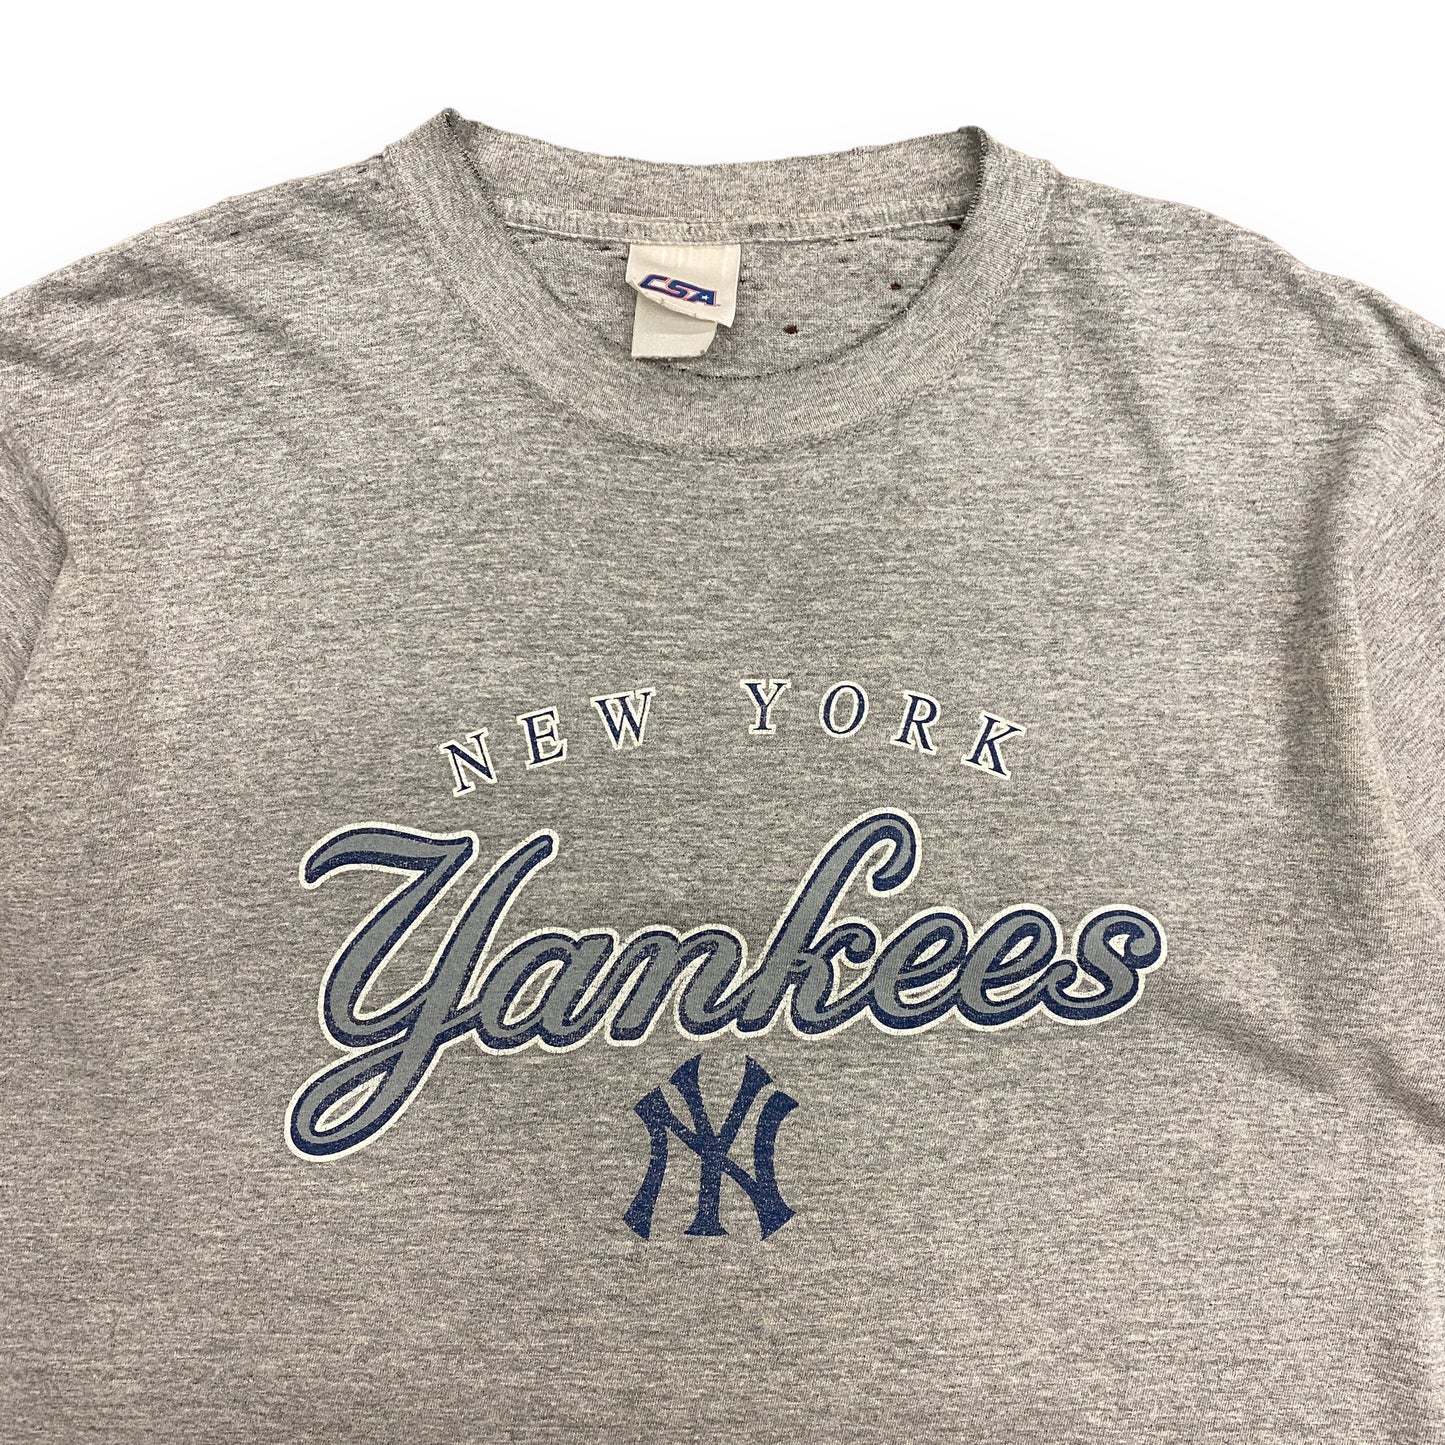 Vintage 1990s New York Yankees Gray Logo Tee - Size Large